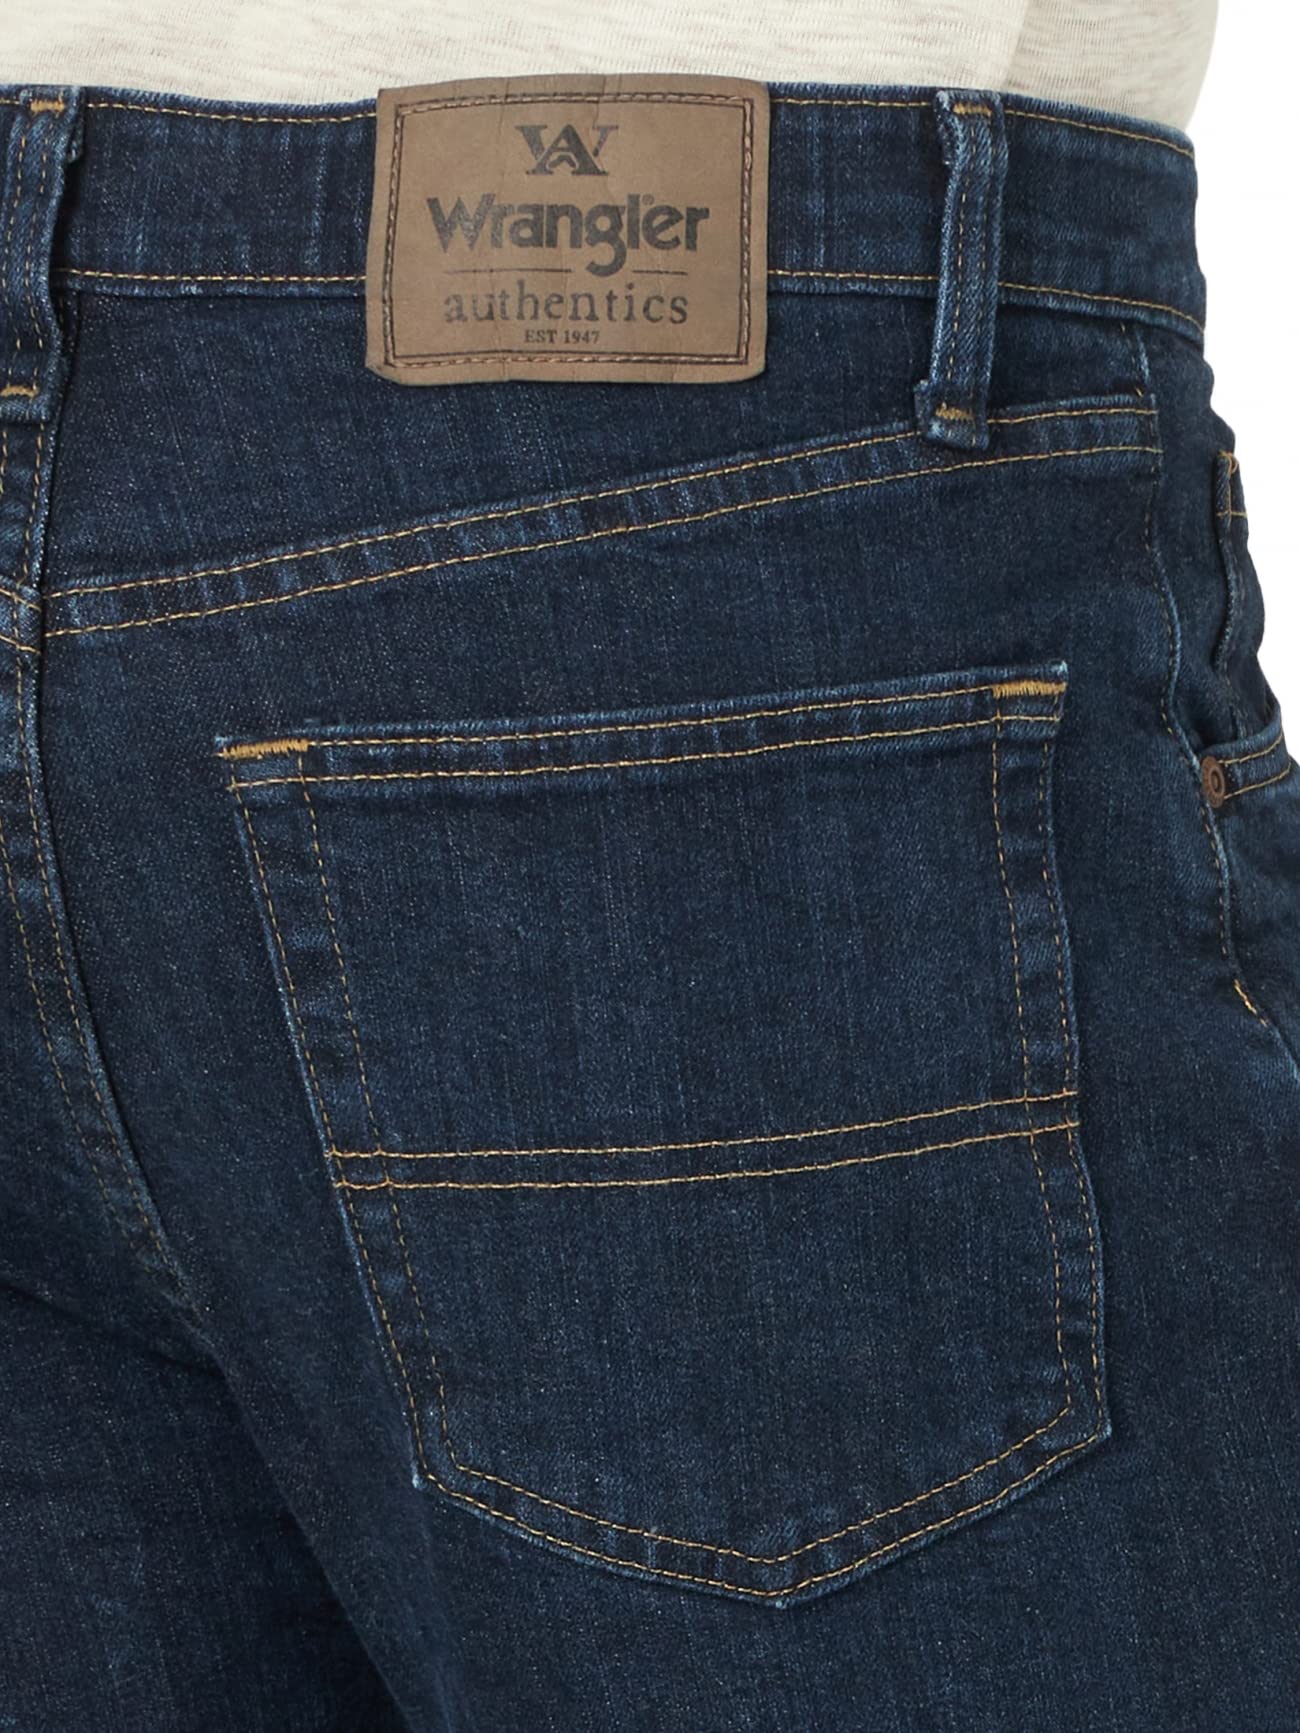 Wrangler Authentics Men's Regular Fit Comfort Flex Waist Jean, Dark Indigo, 36W x 29L